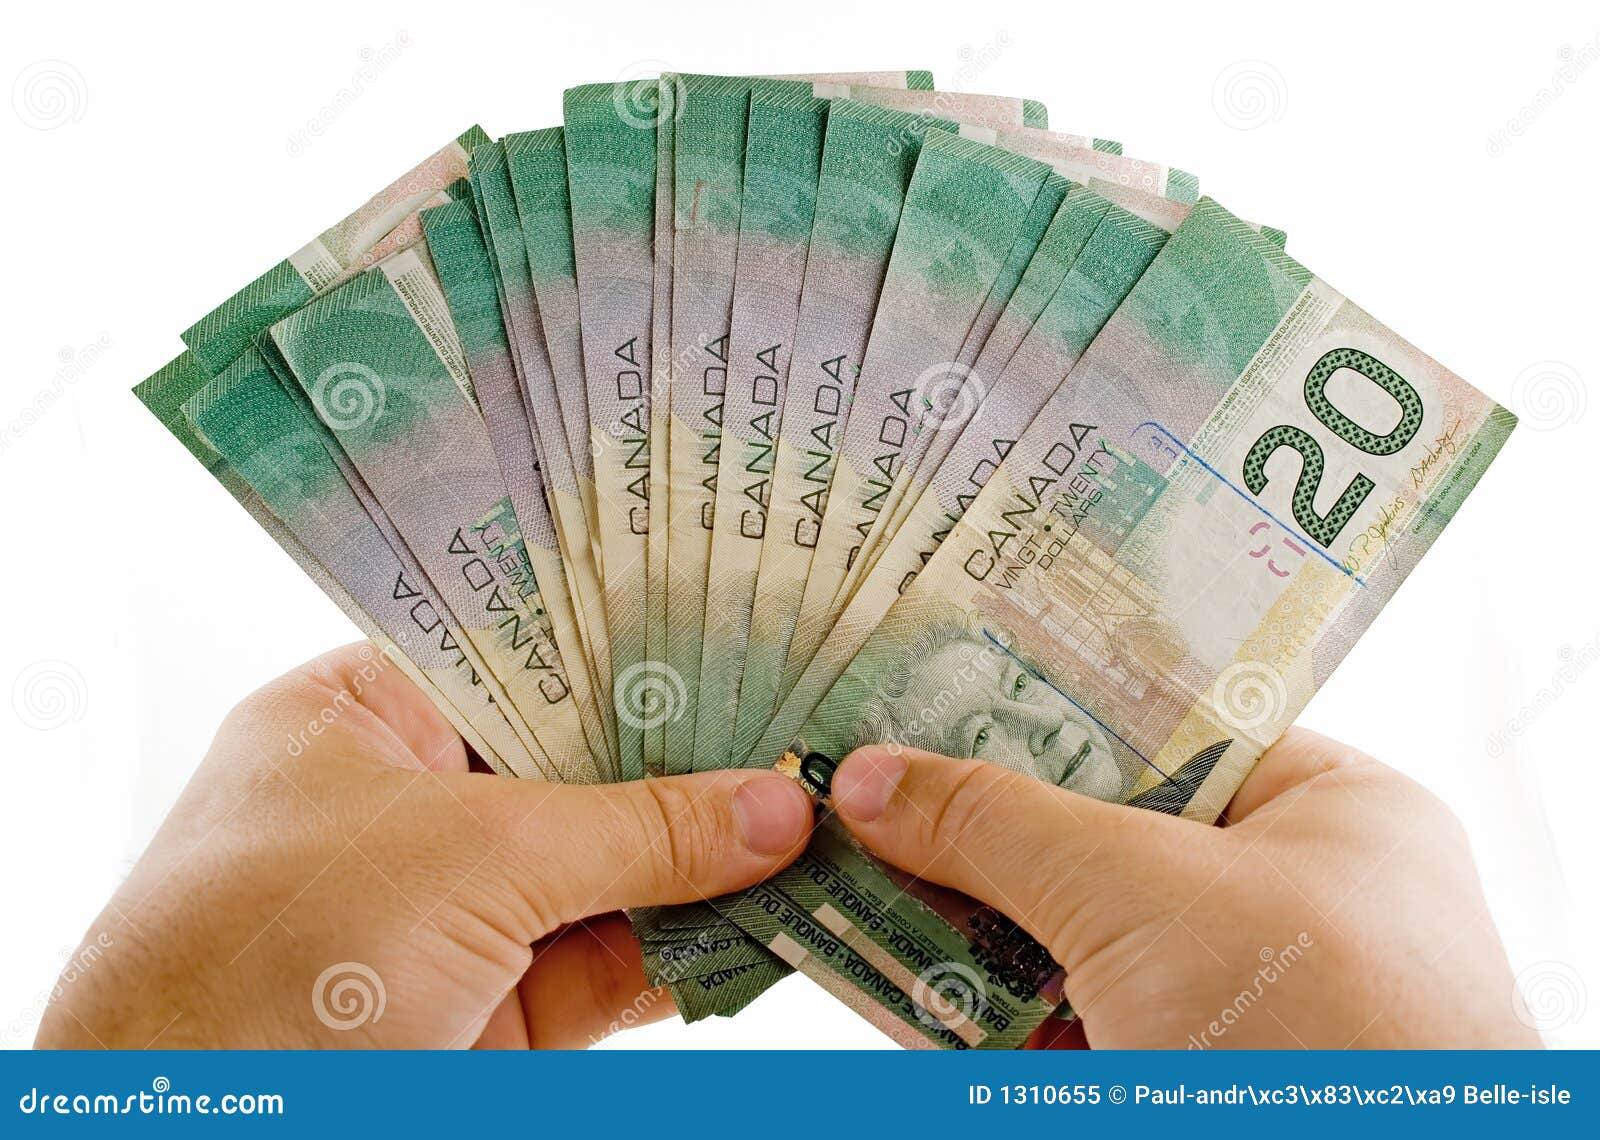 hands-canadian-dollars-1310655.jpg